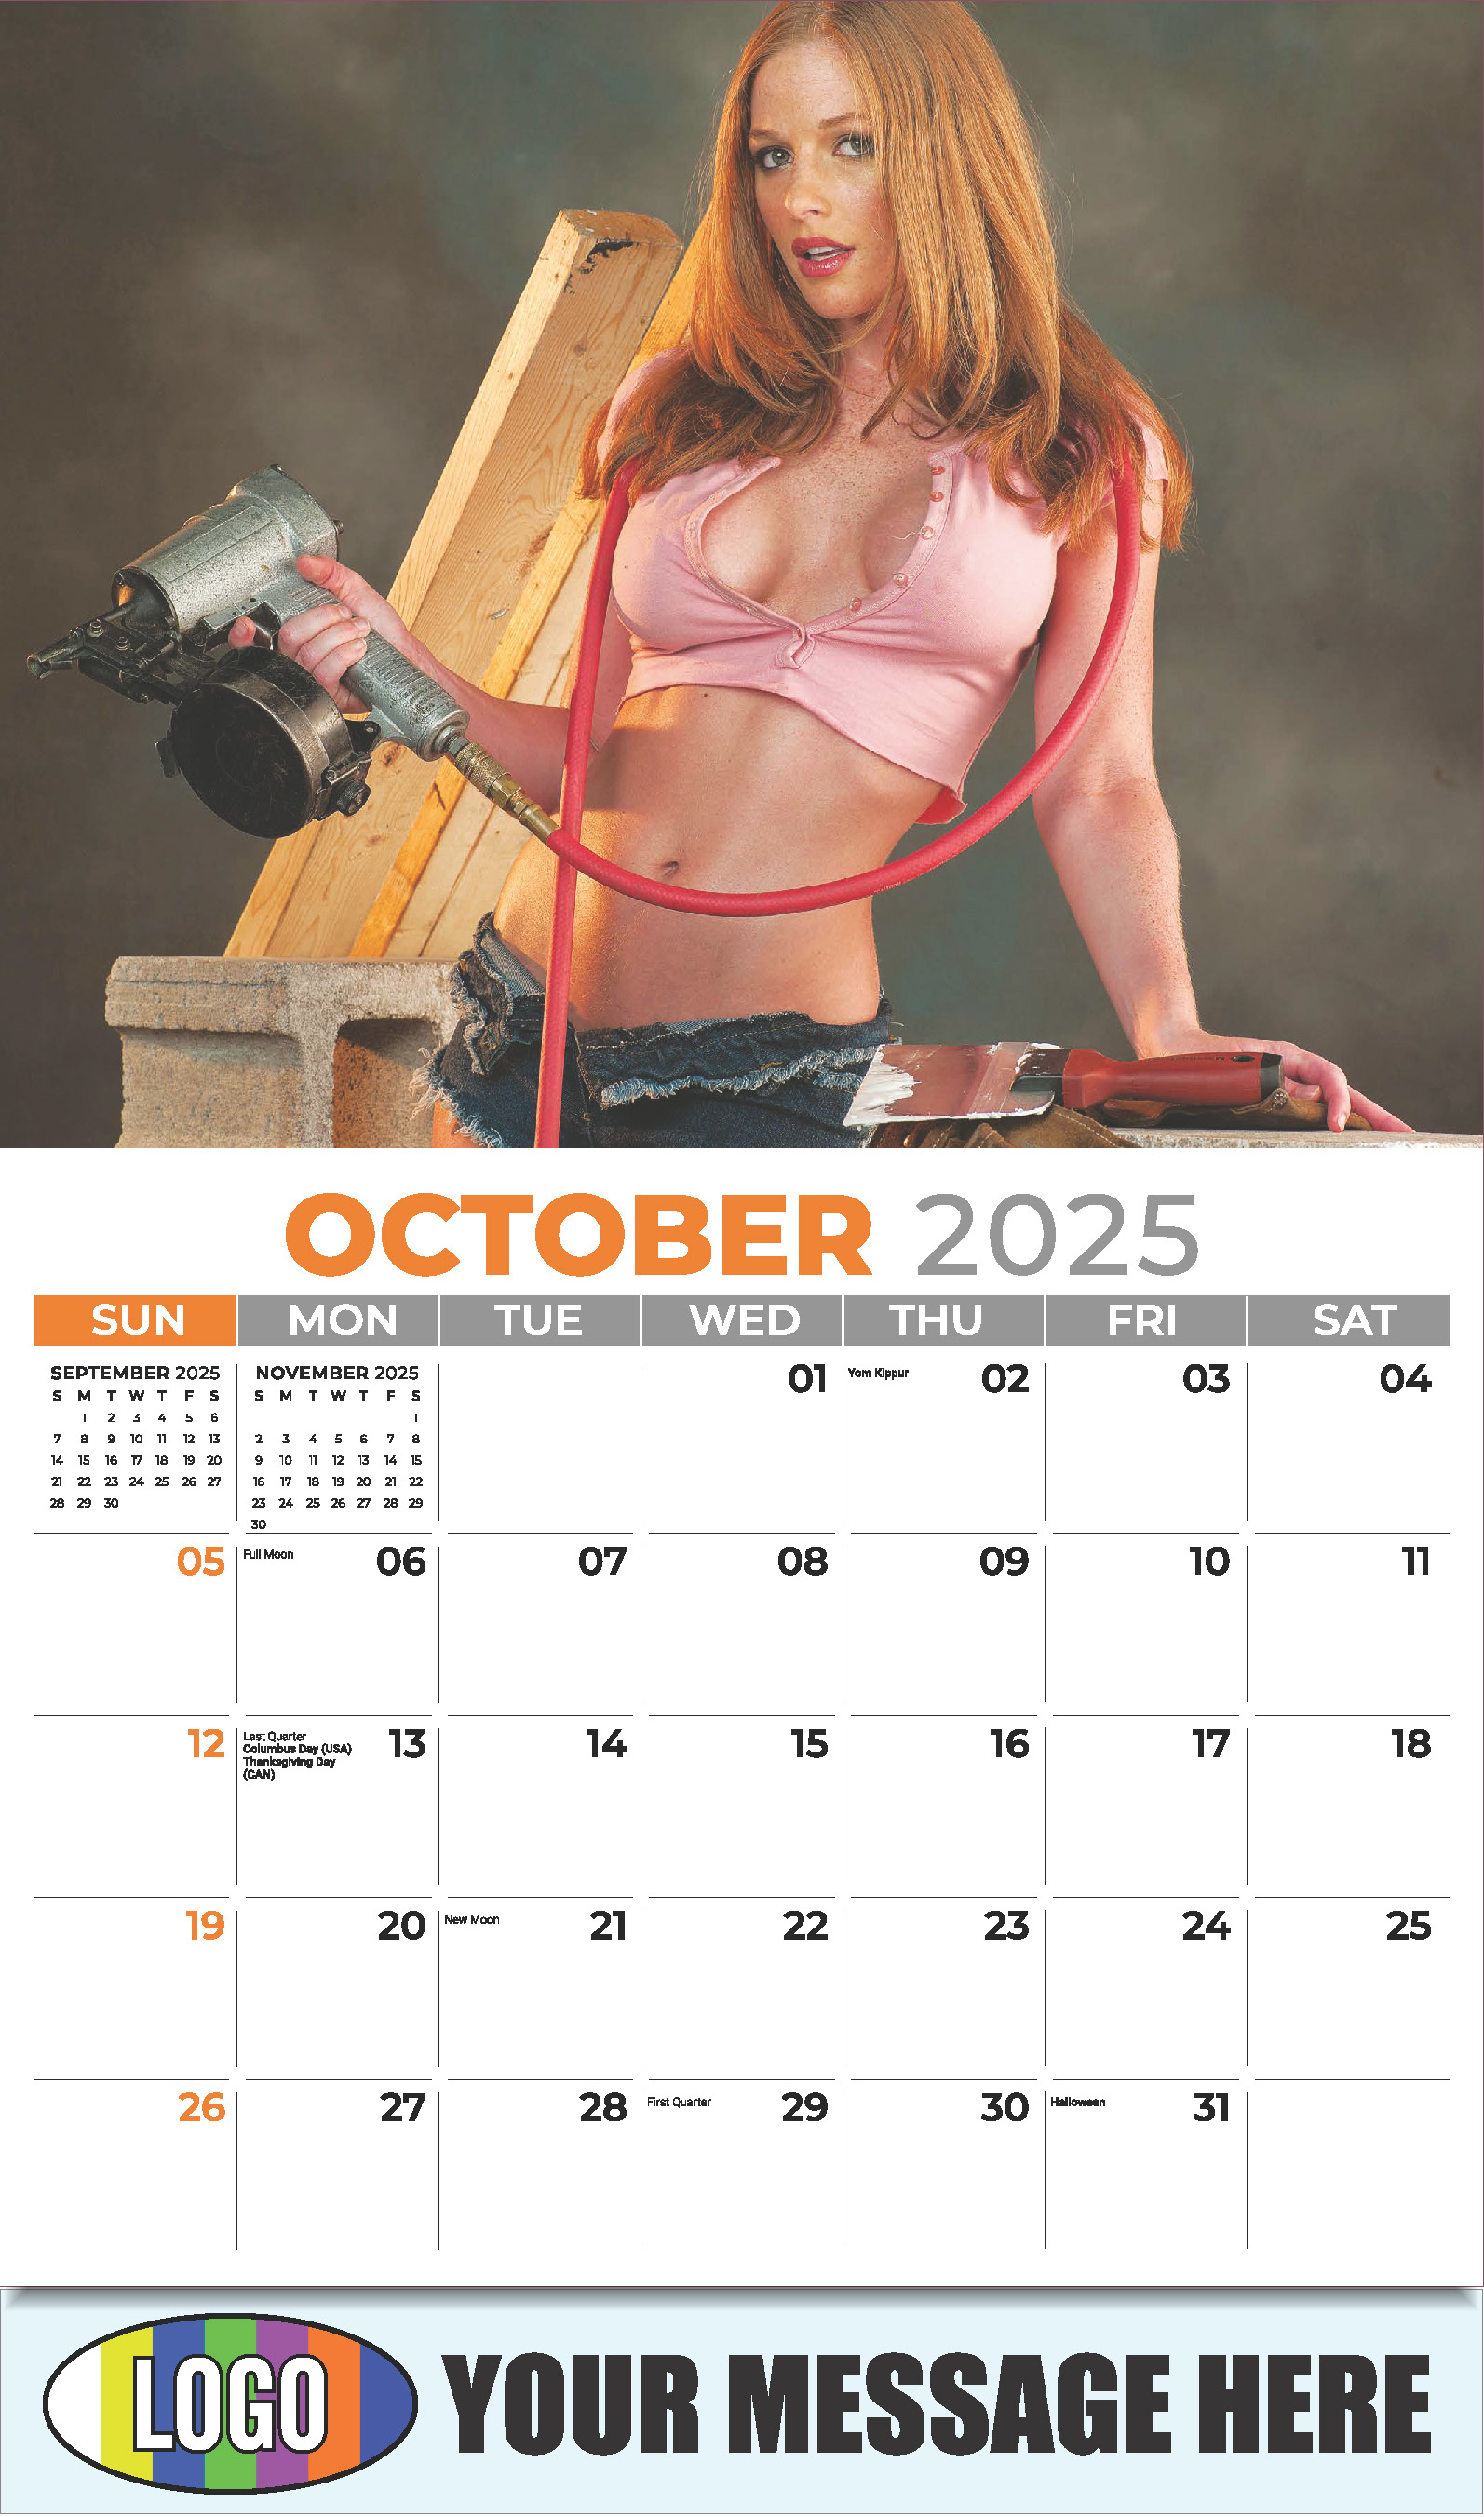 Building Bades 2025 Business Promotional Calendar - October